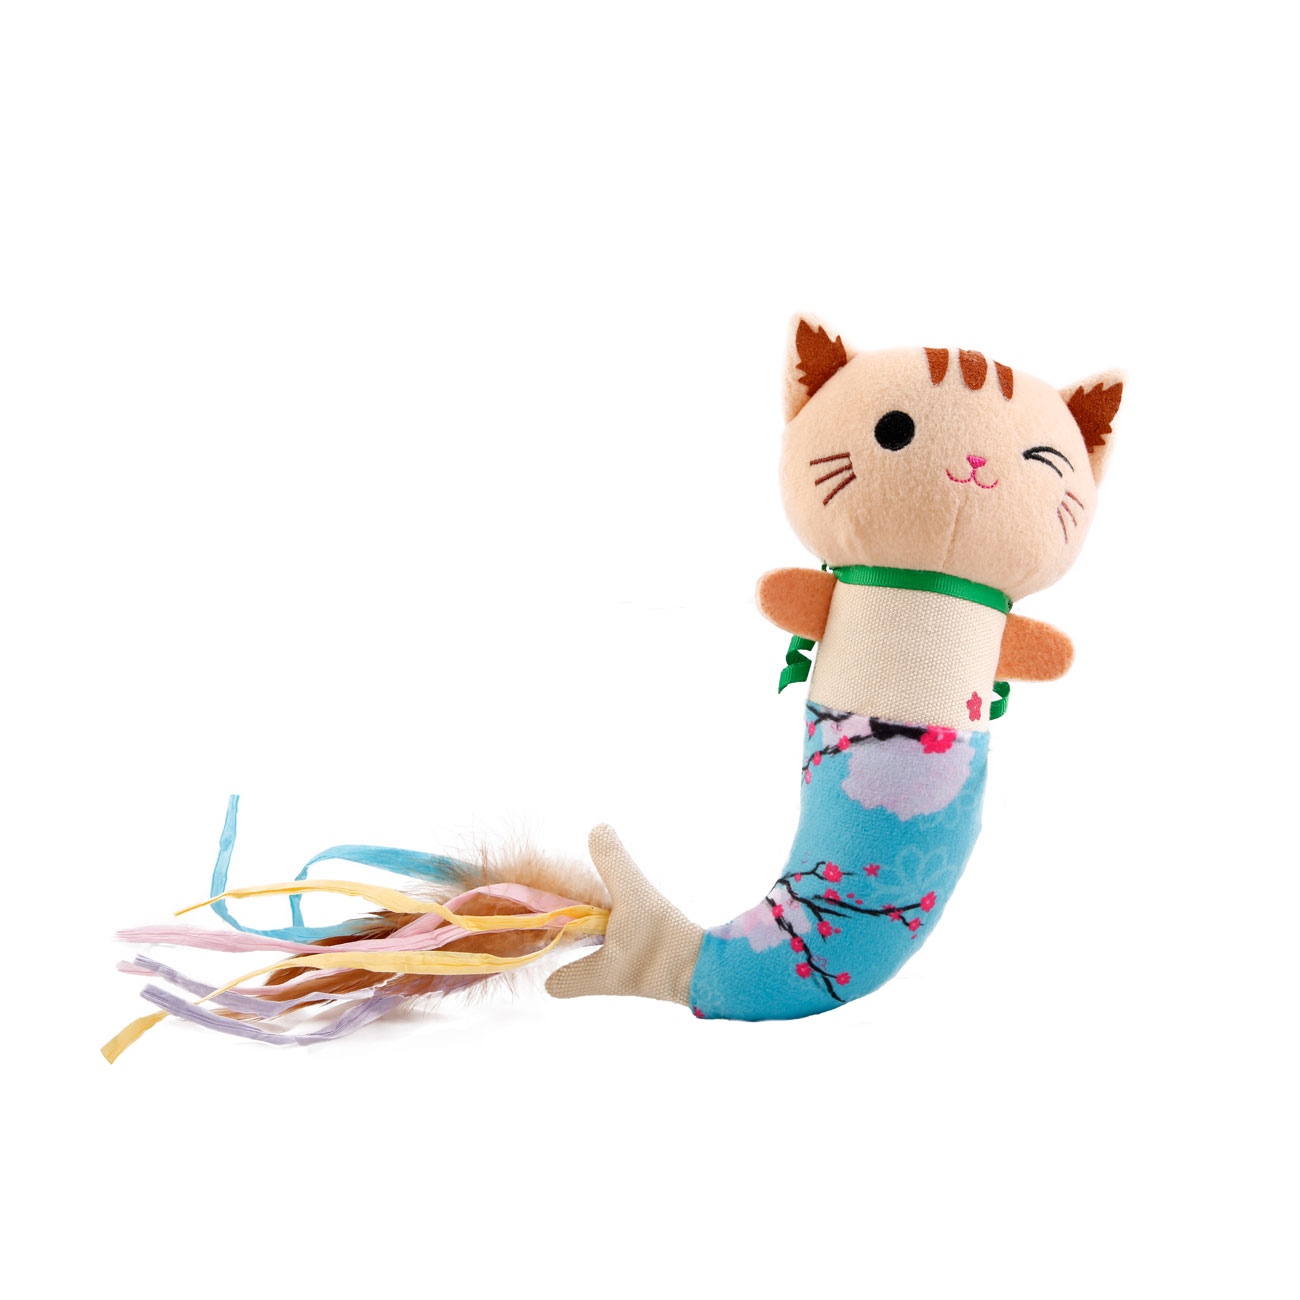 Captivate mermaid kicker cat toy with silver vine and catnip. Hartz SKU#3270011250.